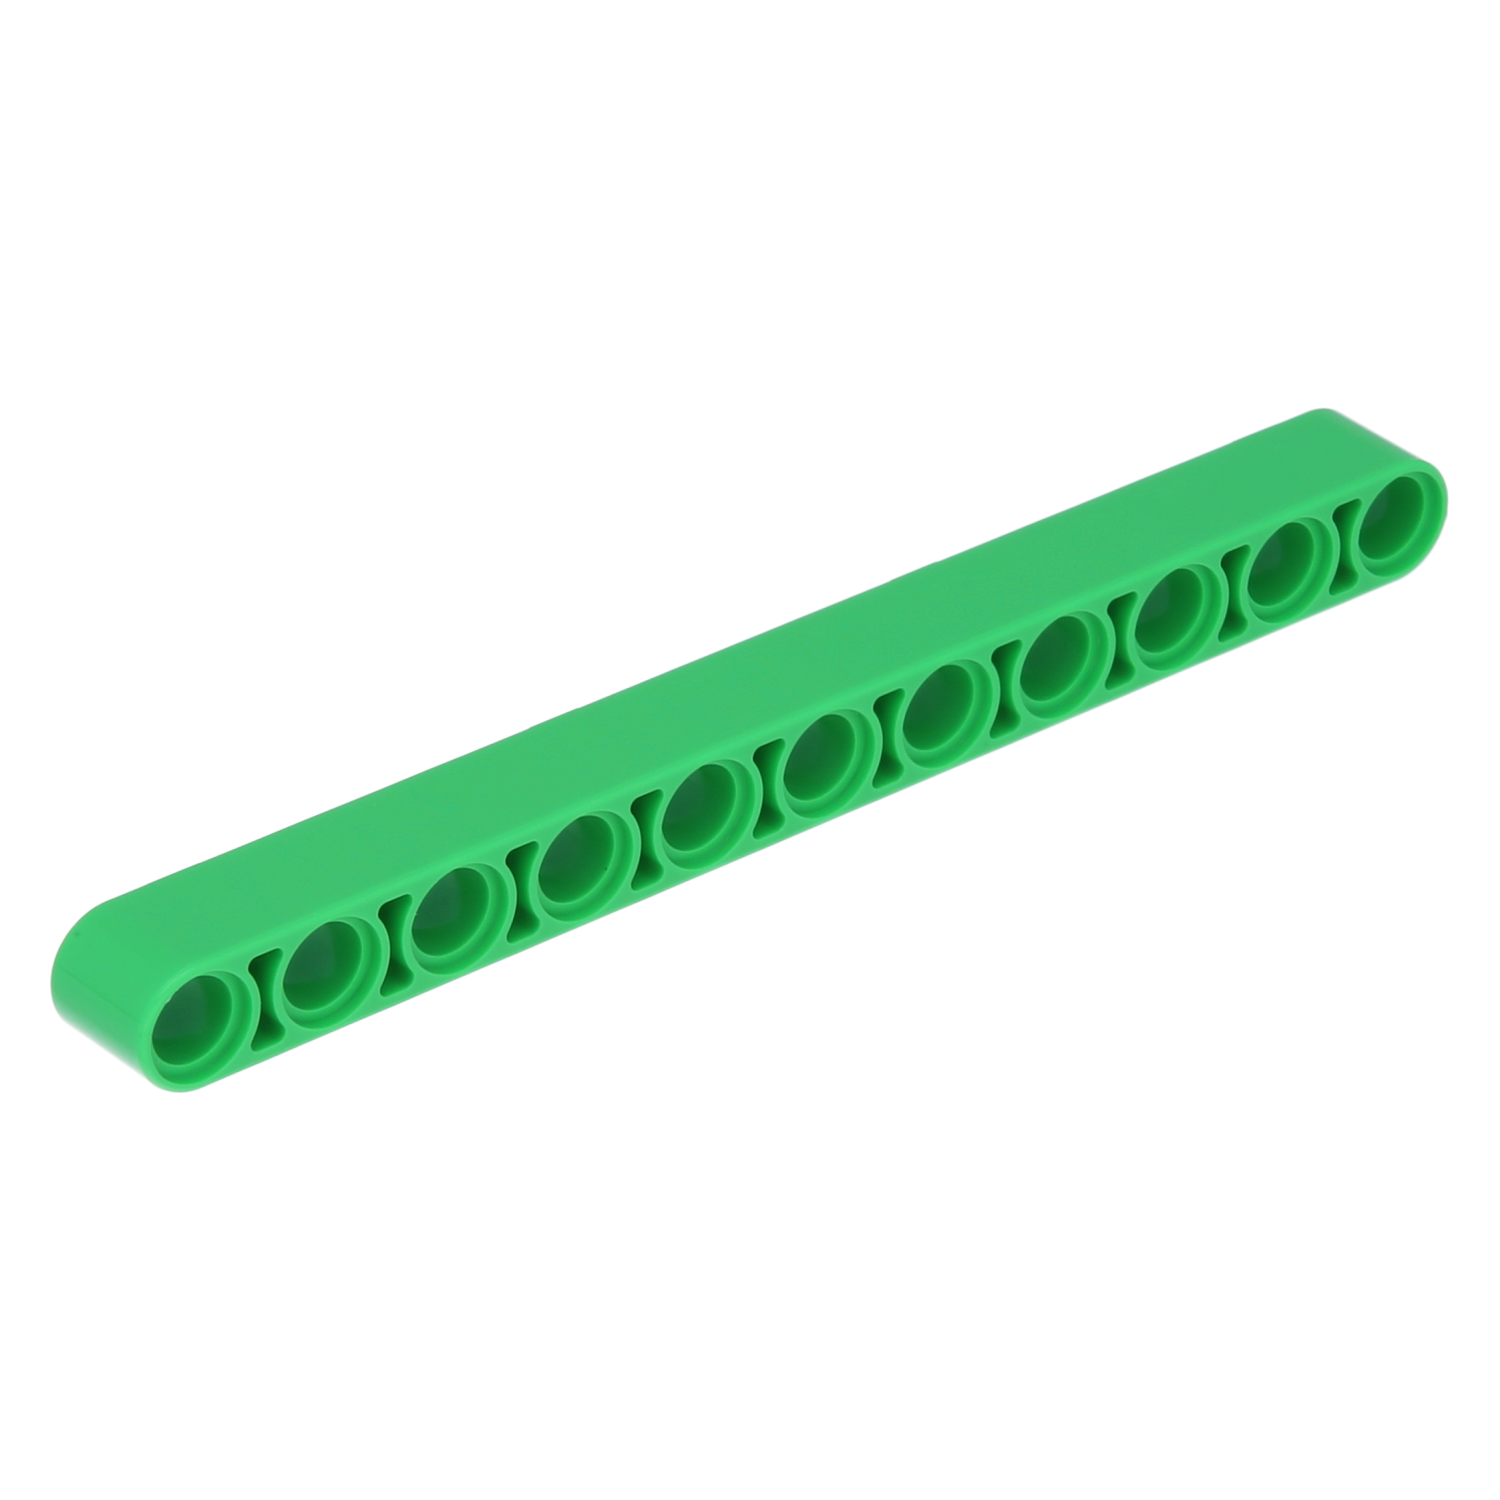 LEGO Technic Lift Arm - 1 x 11 (thick)